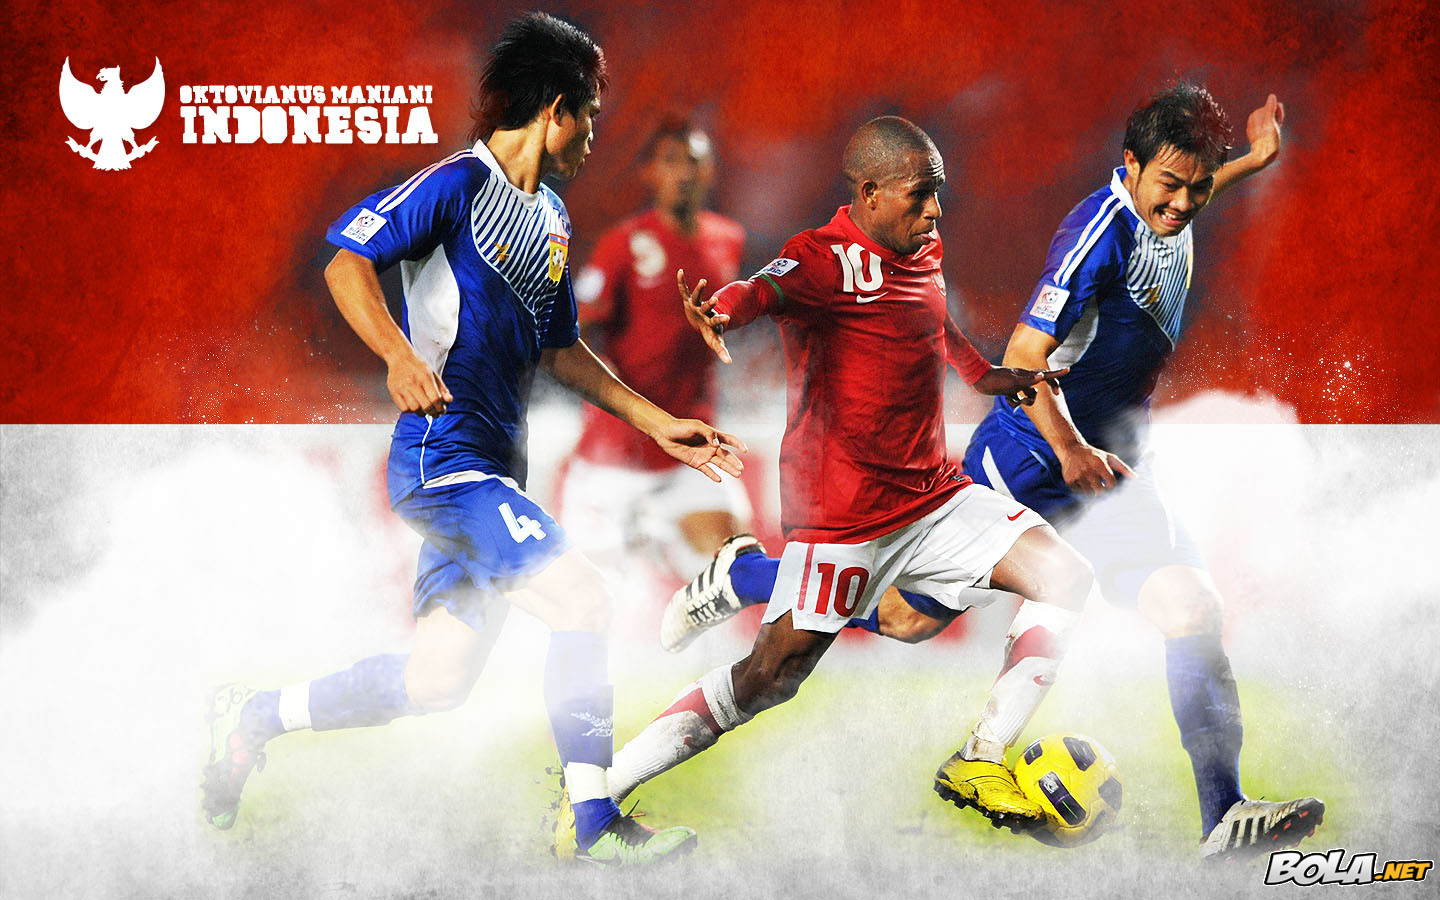 Indonesia National Team WORLD FOOTBALL STORY